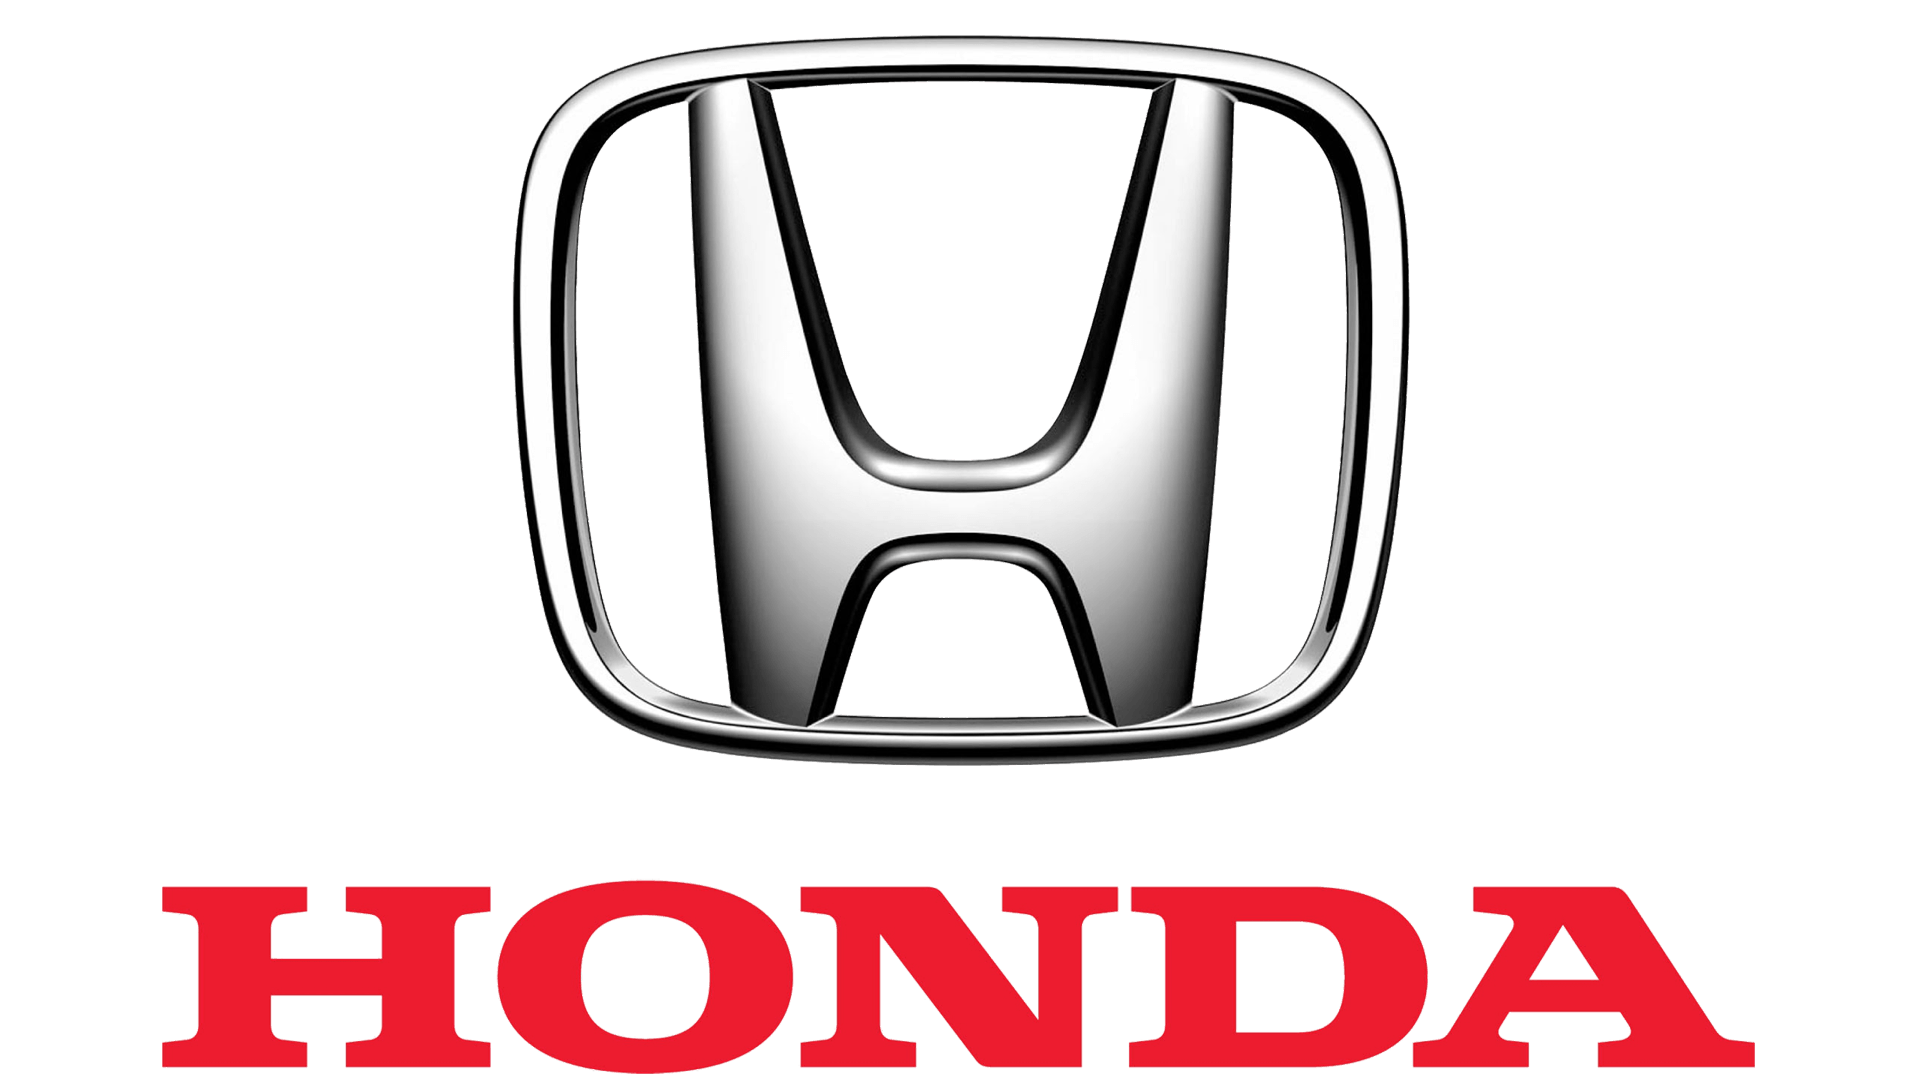 Honda Motor Revises Operating Profit Up to 4.1 Billion Dollars